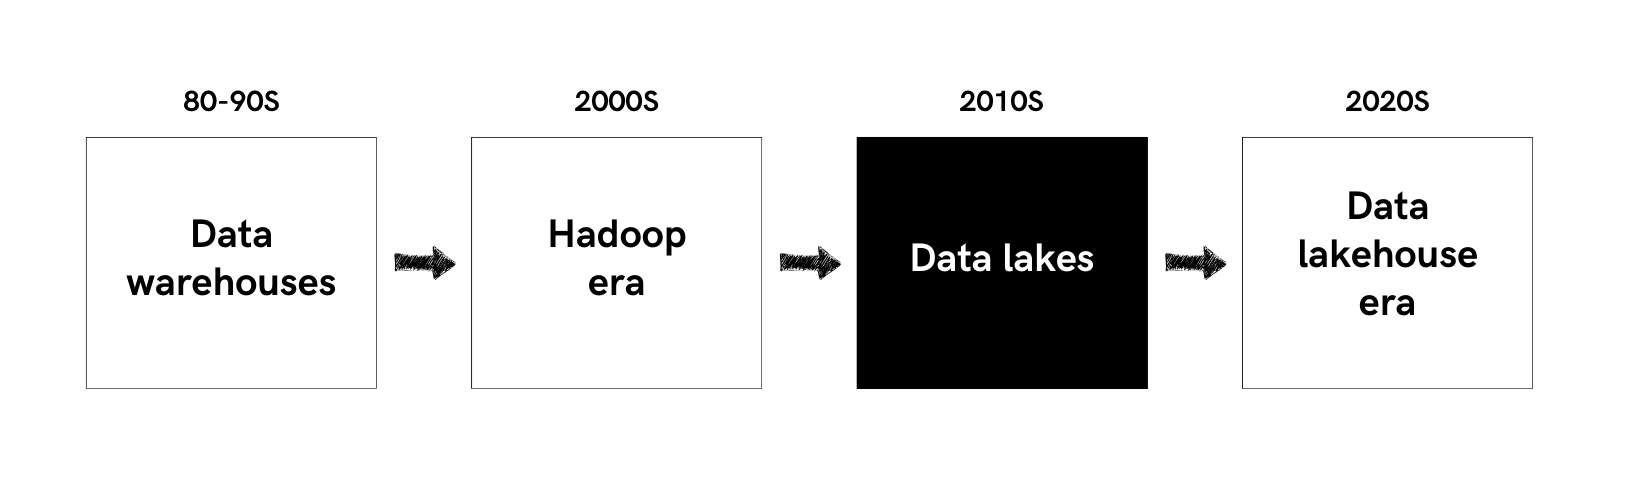 History of Data Lakehouse - Data Lakes